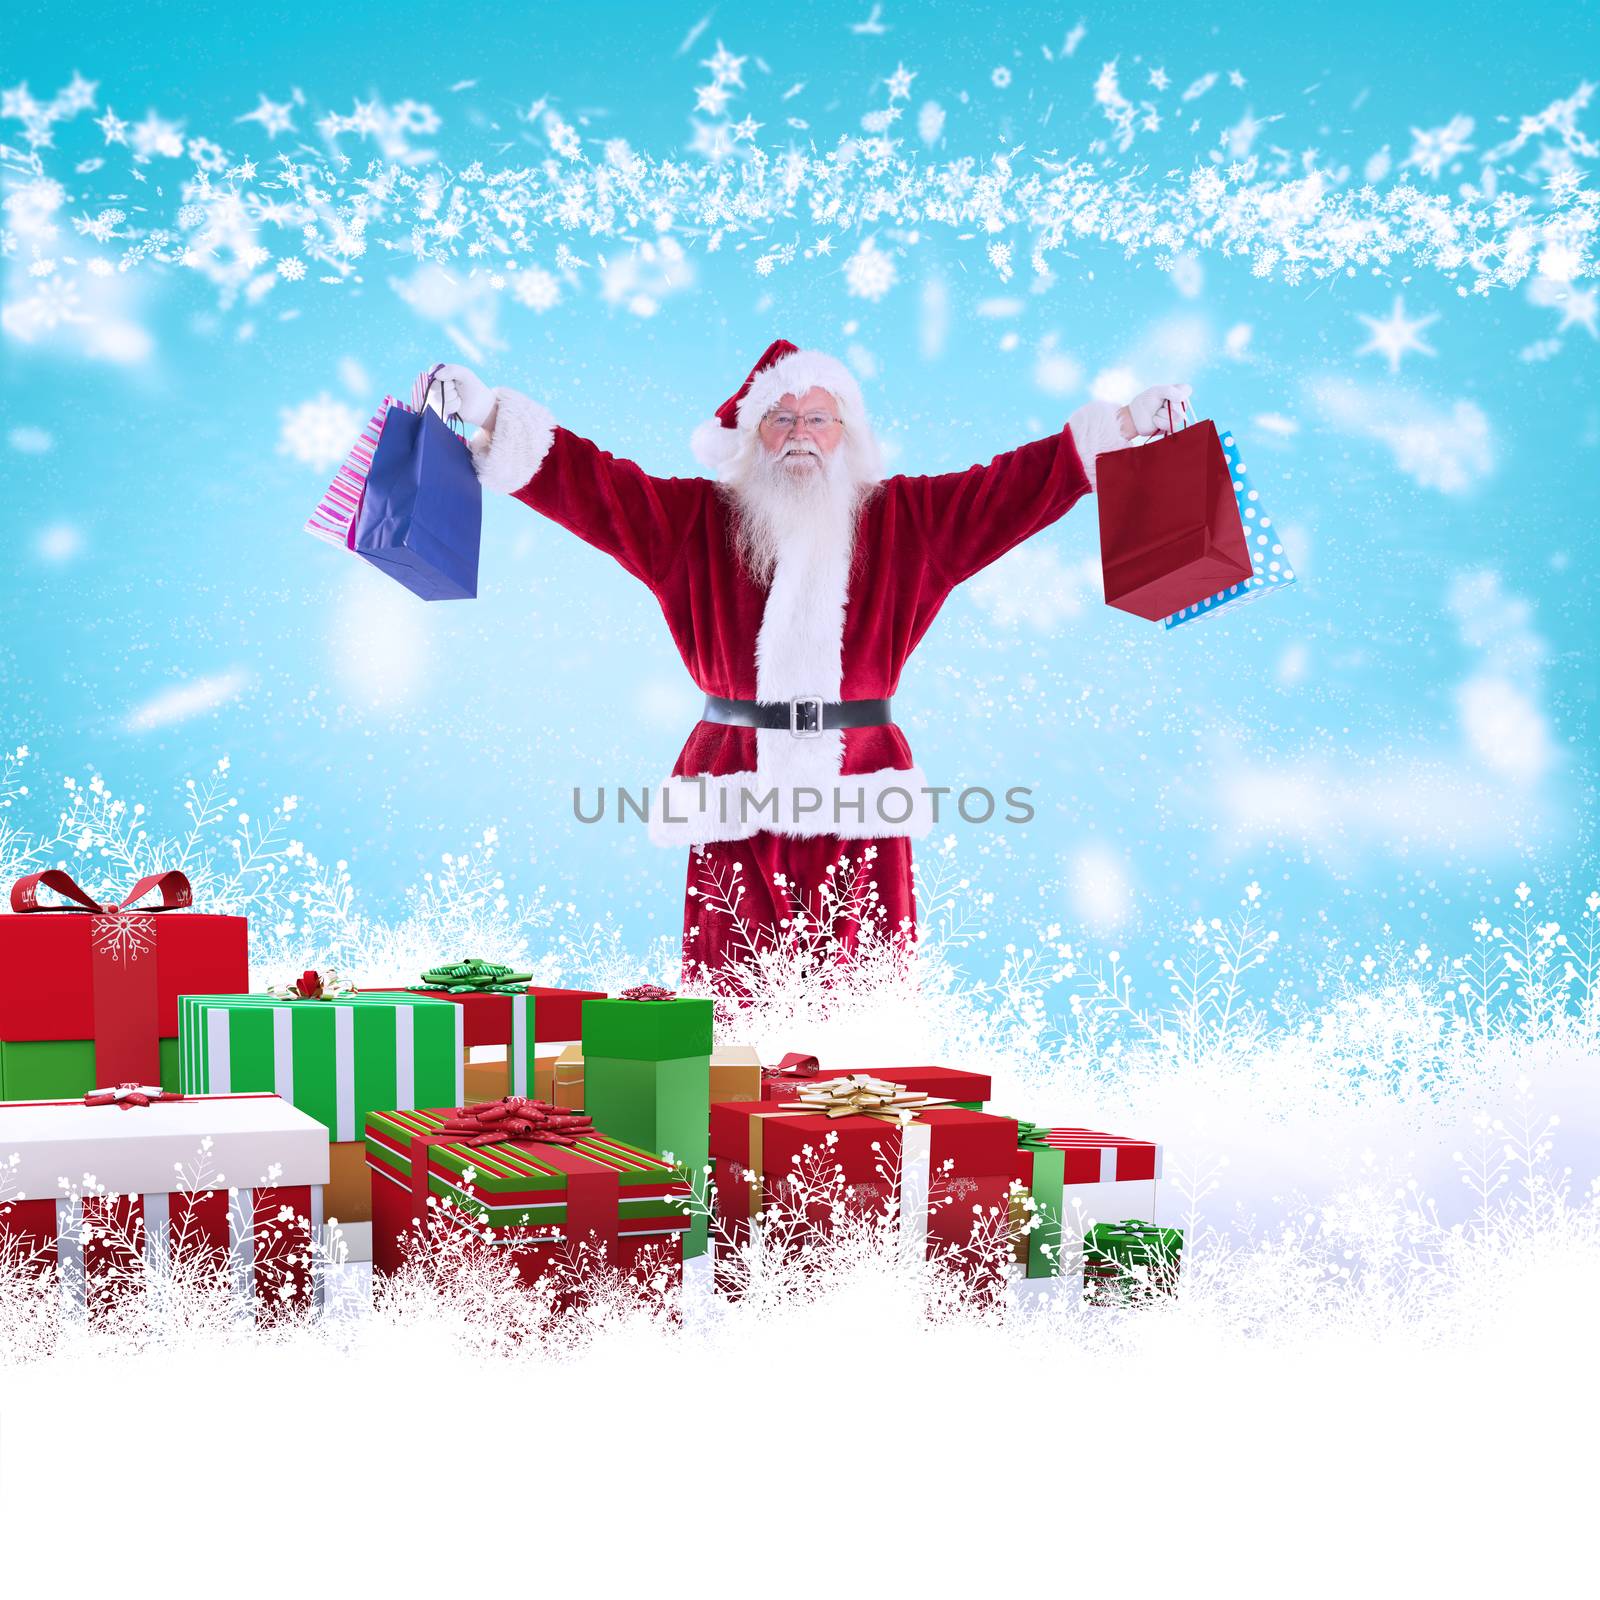 Santa holds some bags for Chistmas against blue vignette